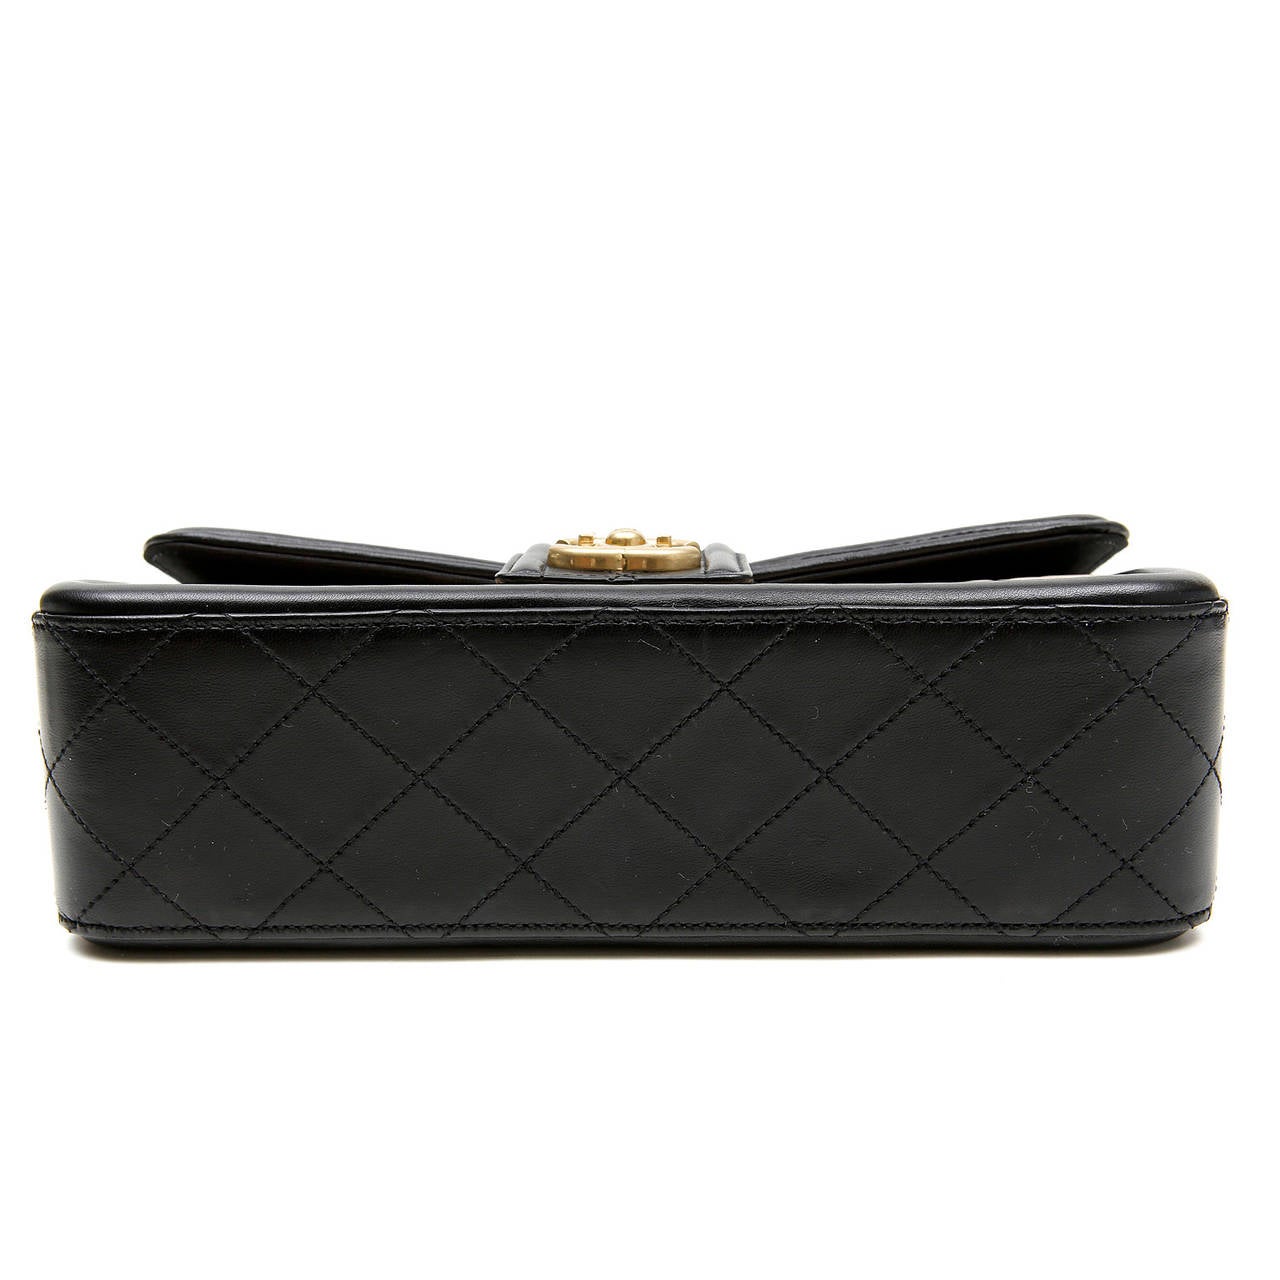 Women's Chanel Beige Leather Black Trim Flap Bag